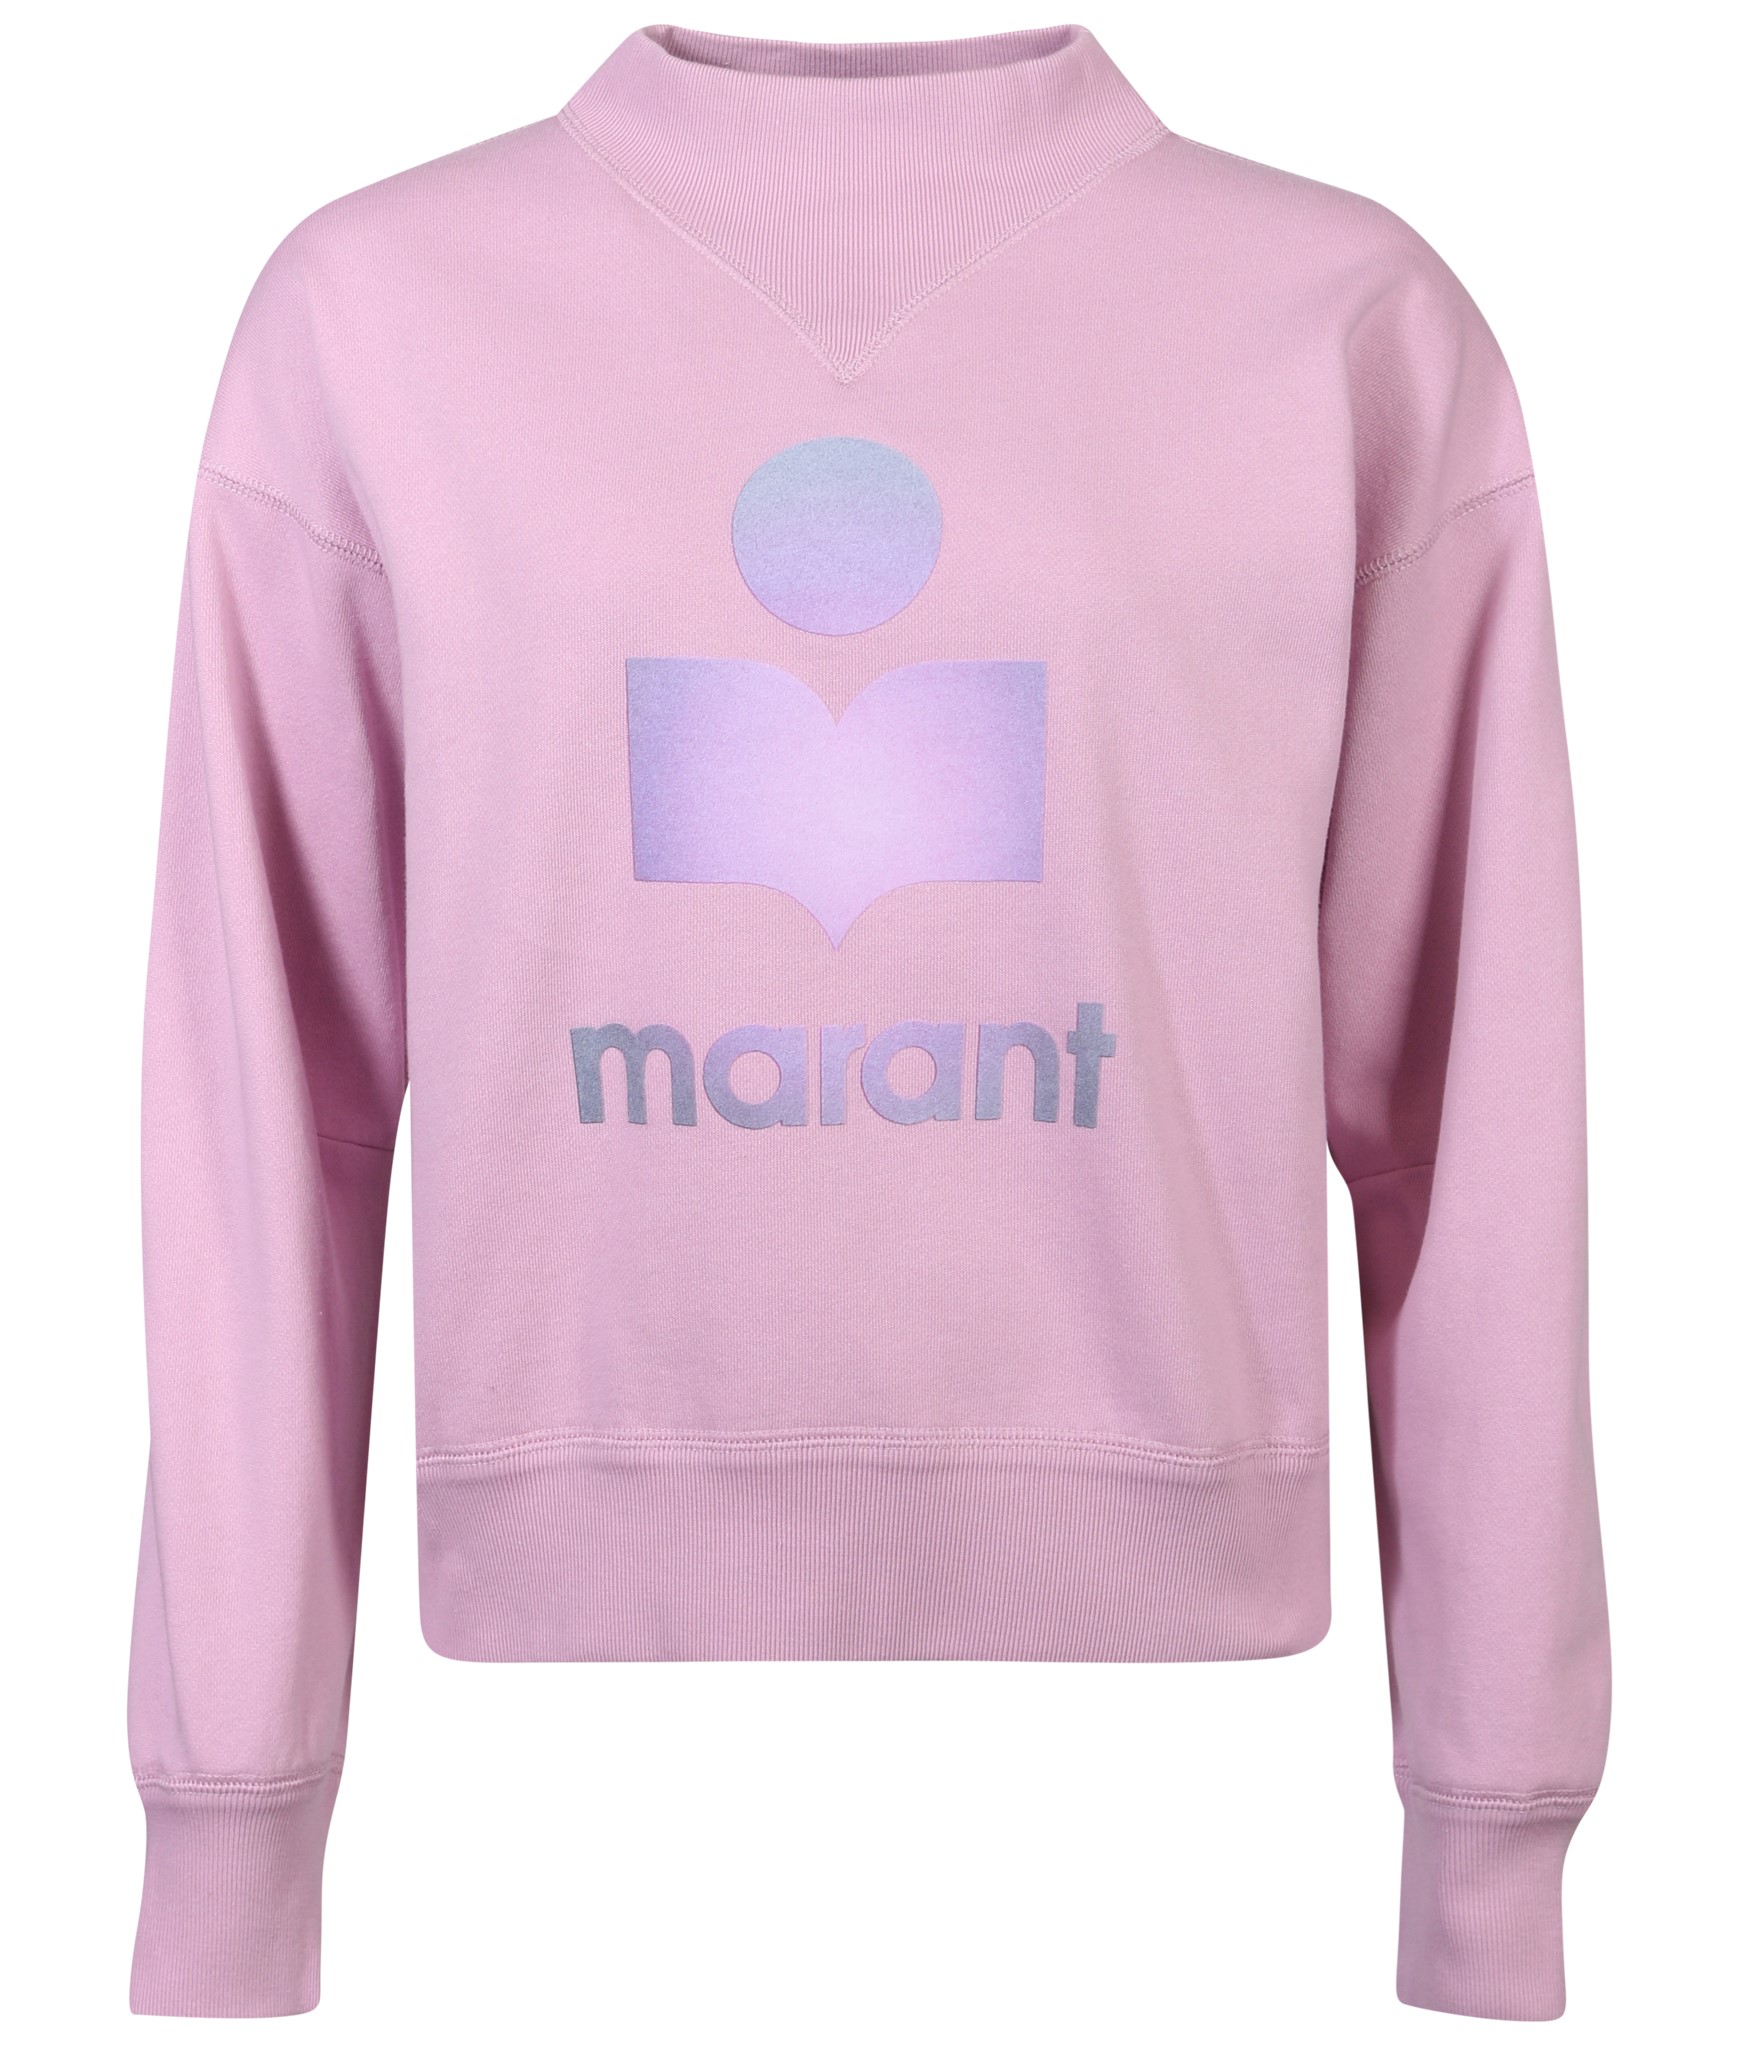 ISABEL MARANT ÉTOILE Moby Sweatshirt in Light Pink FR38 / DE36